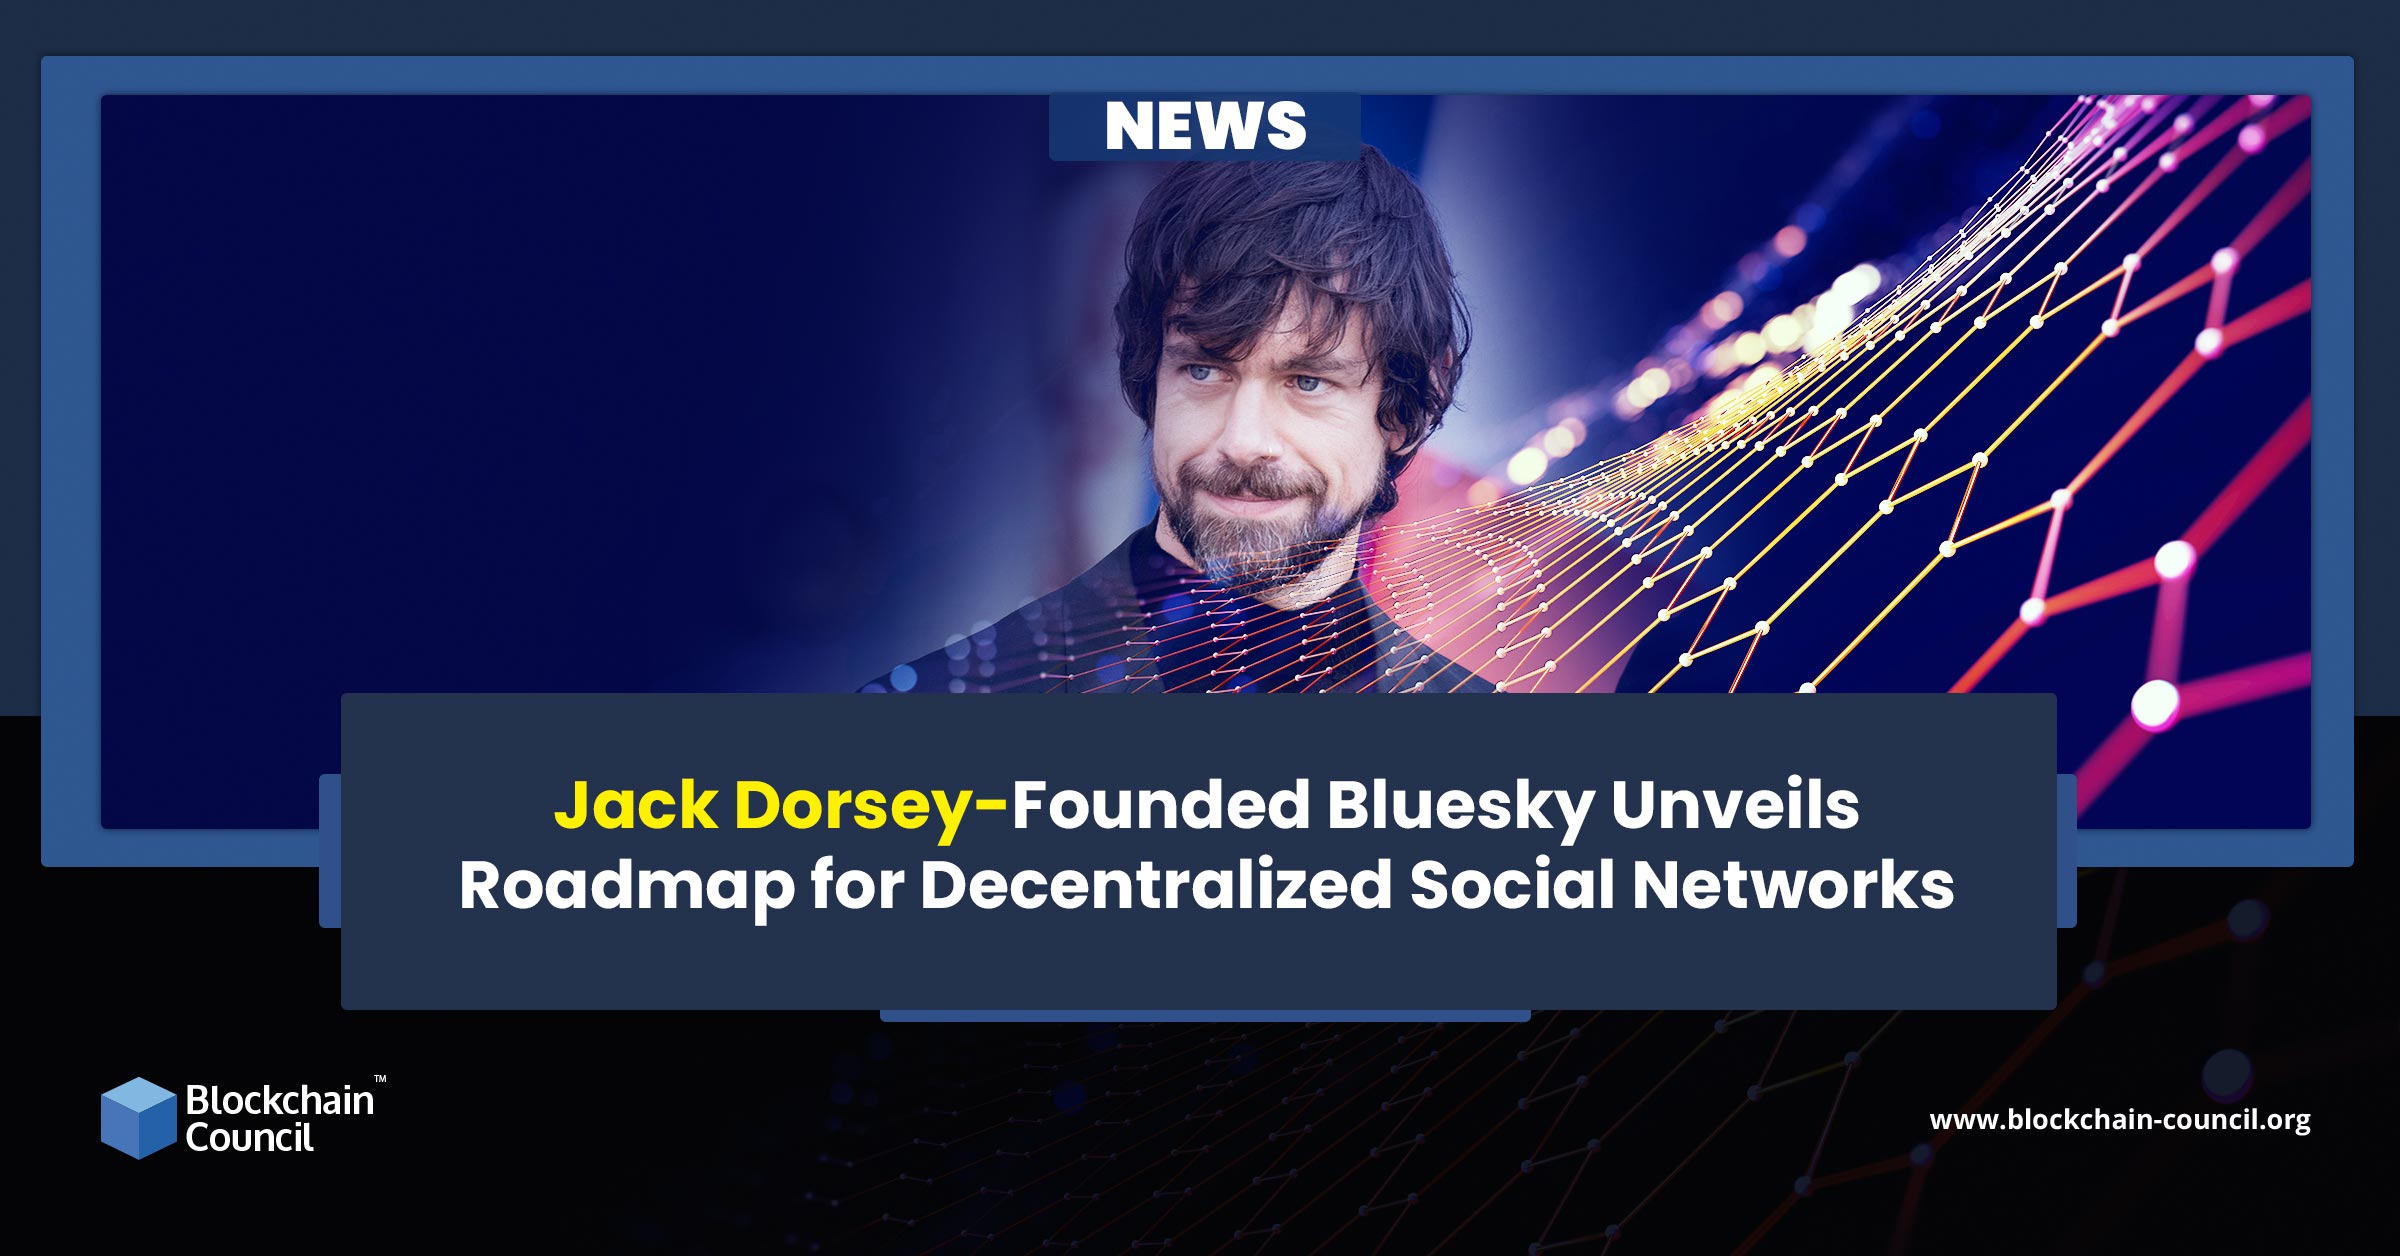 Jack Dorsey-Founded Bluesky Unveils Roadmap for Decentralized Social Networks